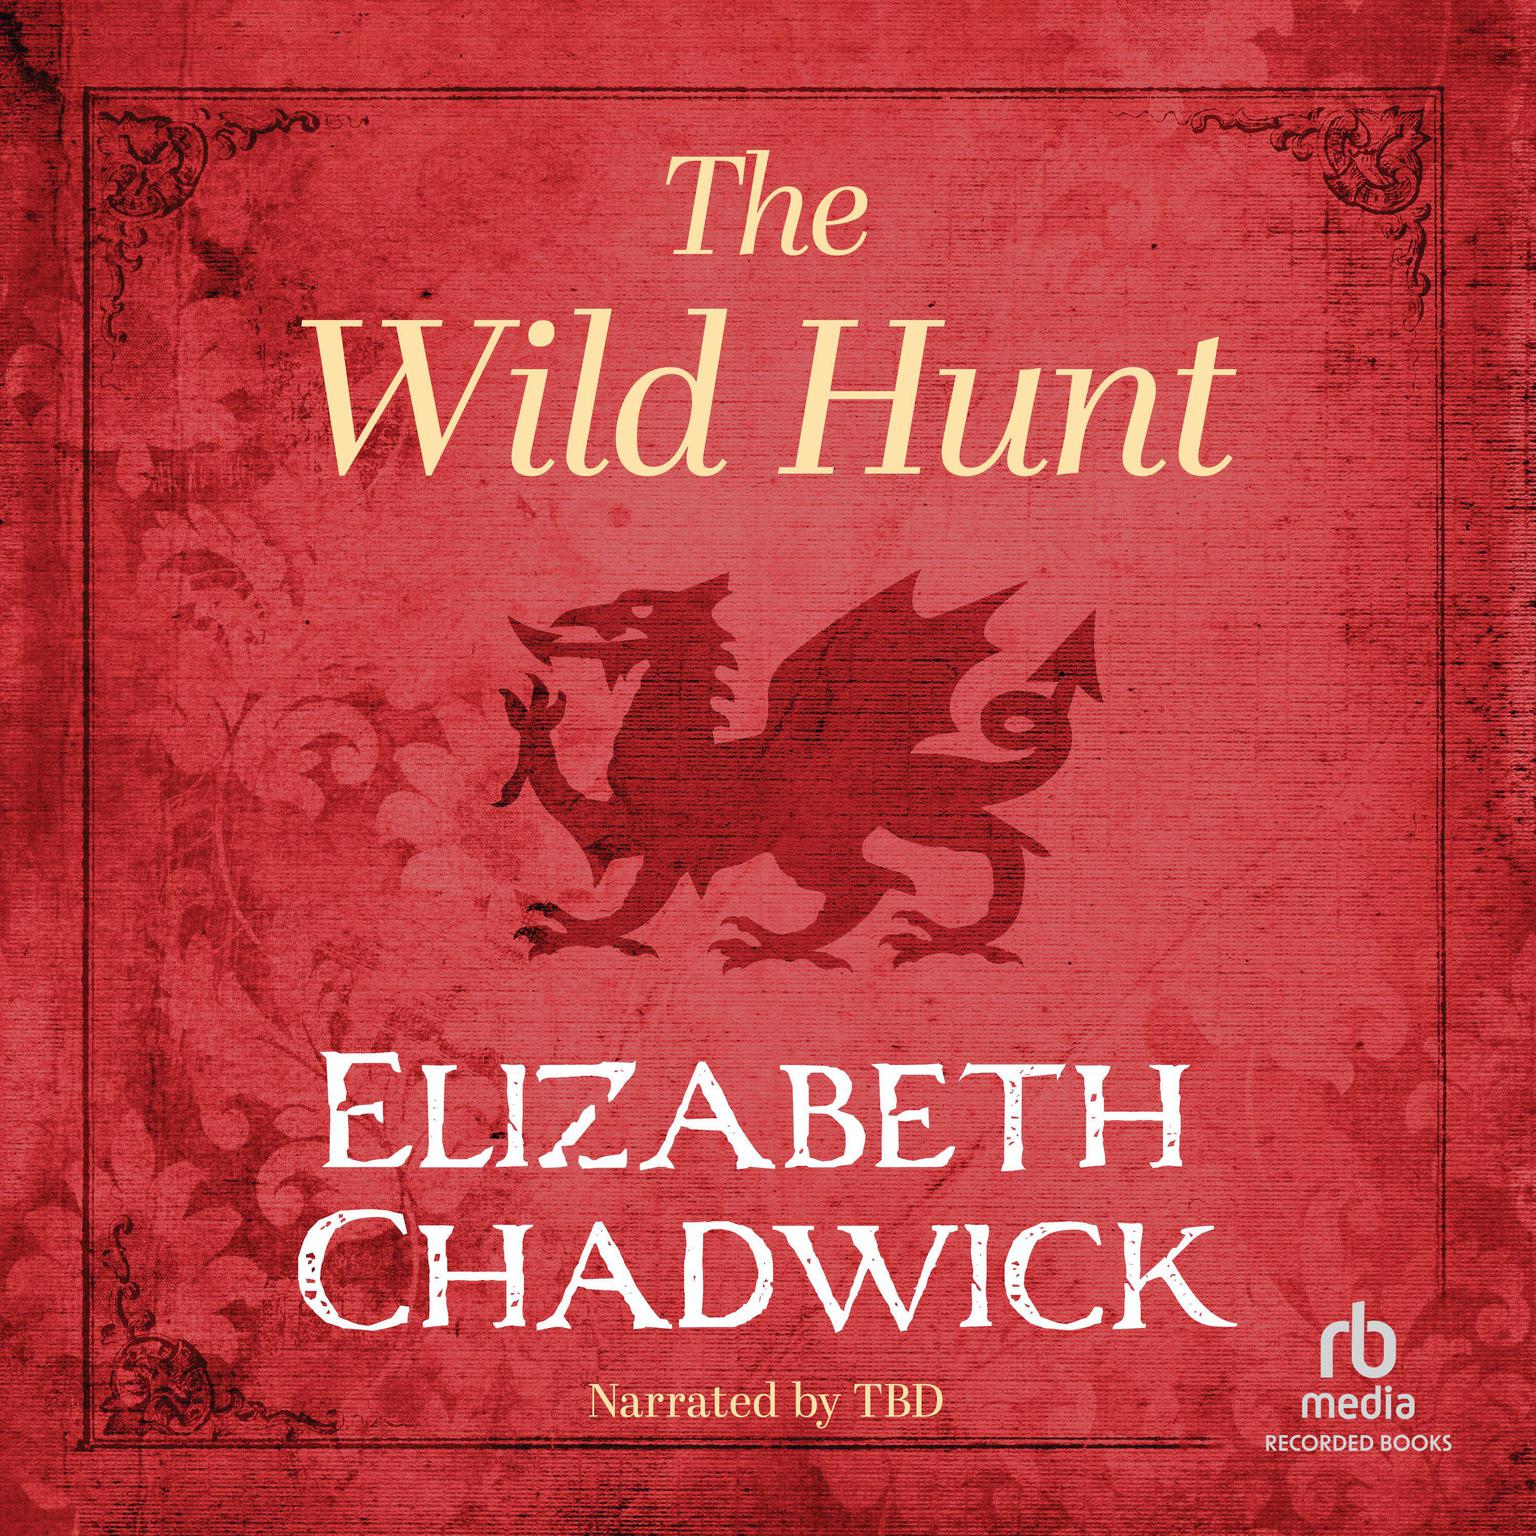 The Wild Hunt Audiobook, by Elizabeth Chadwick